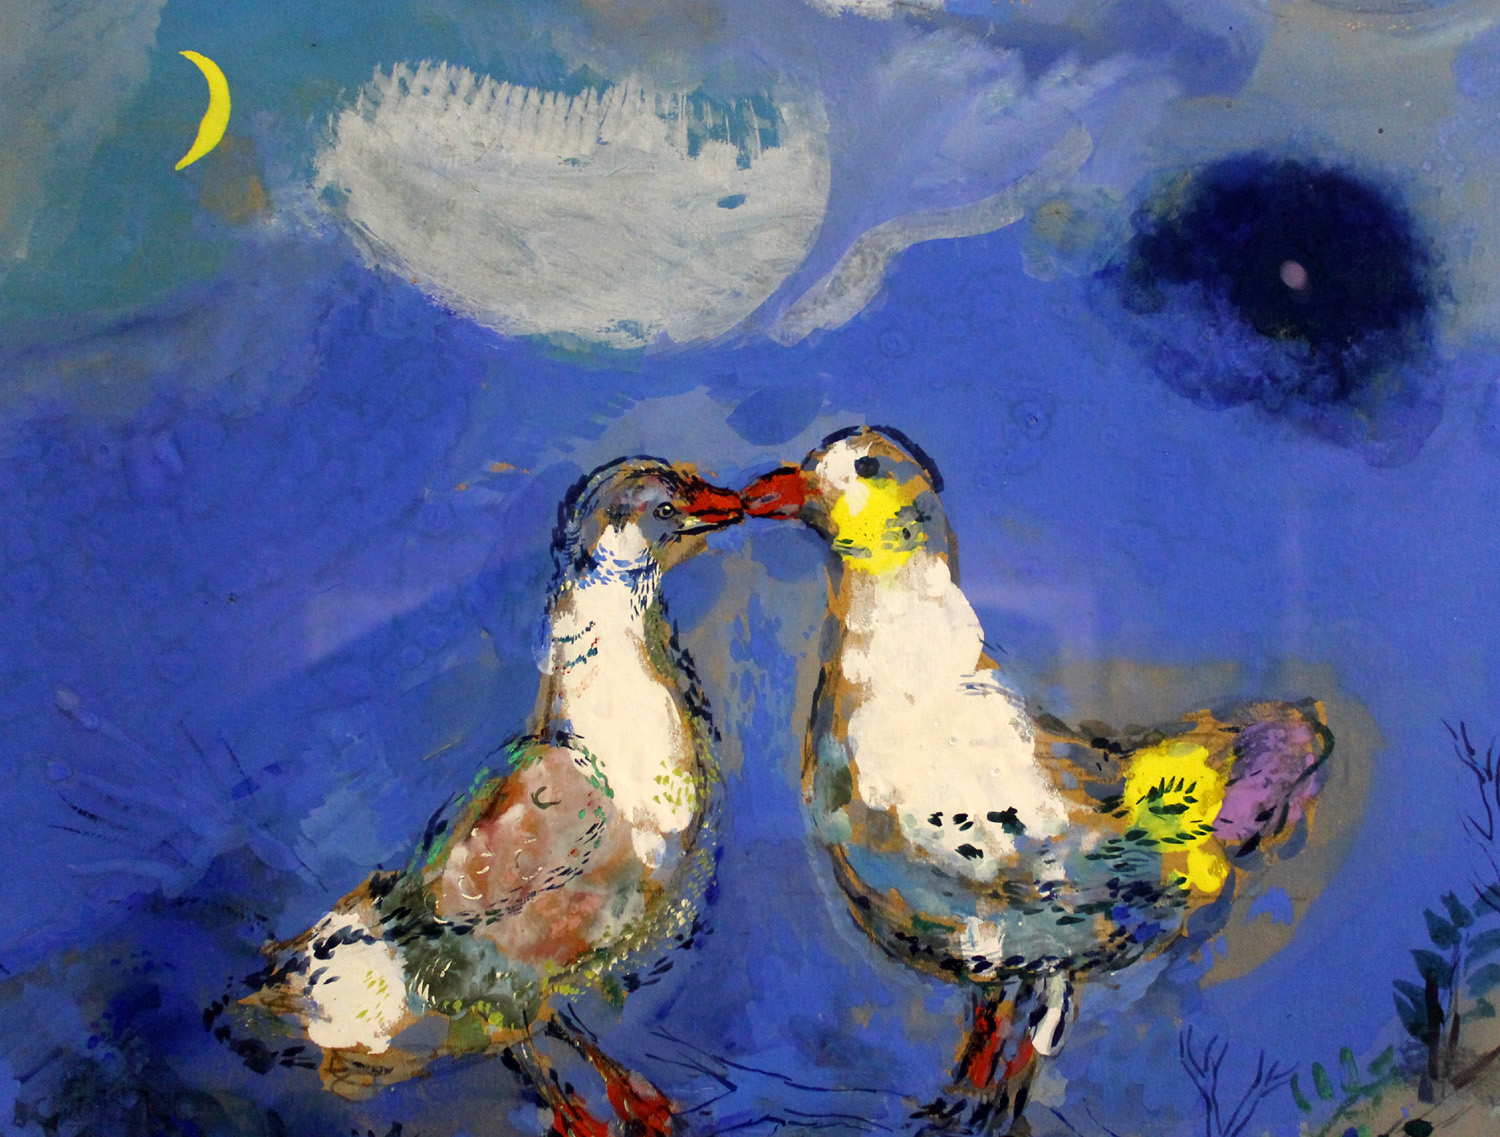 Marc+Chagall-1887-1985 (372).jpg